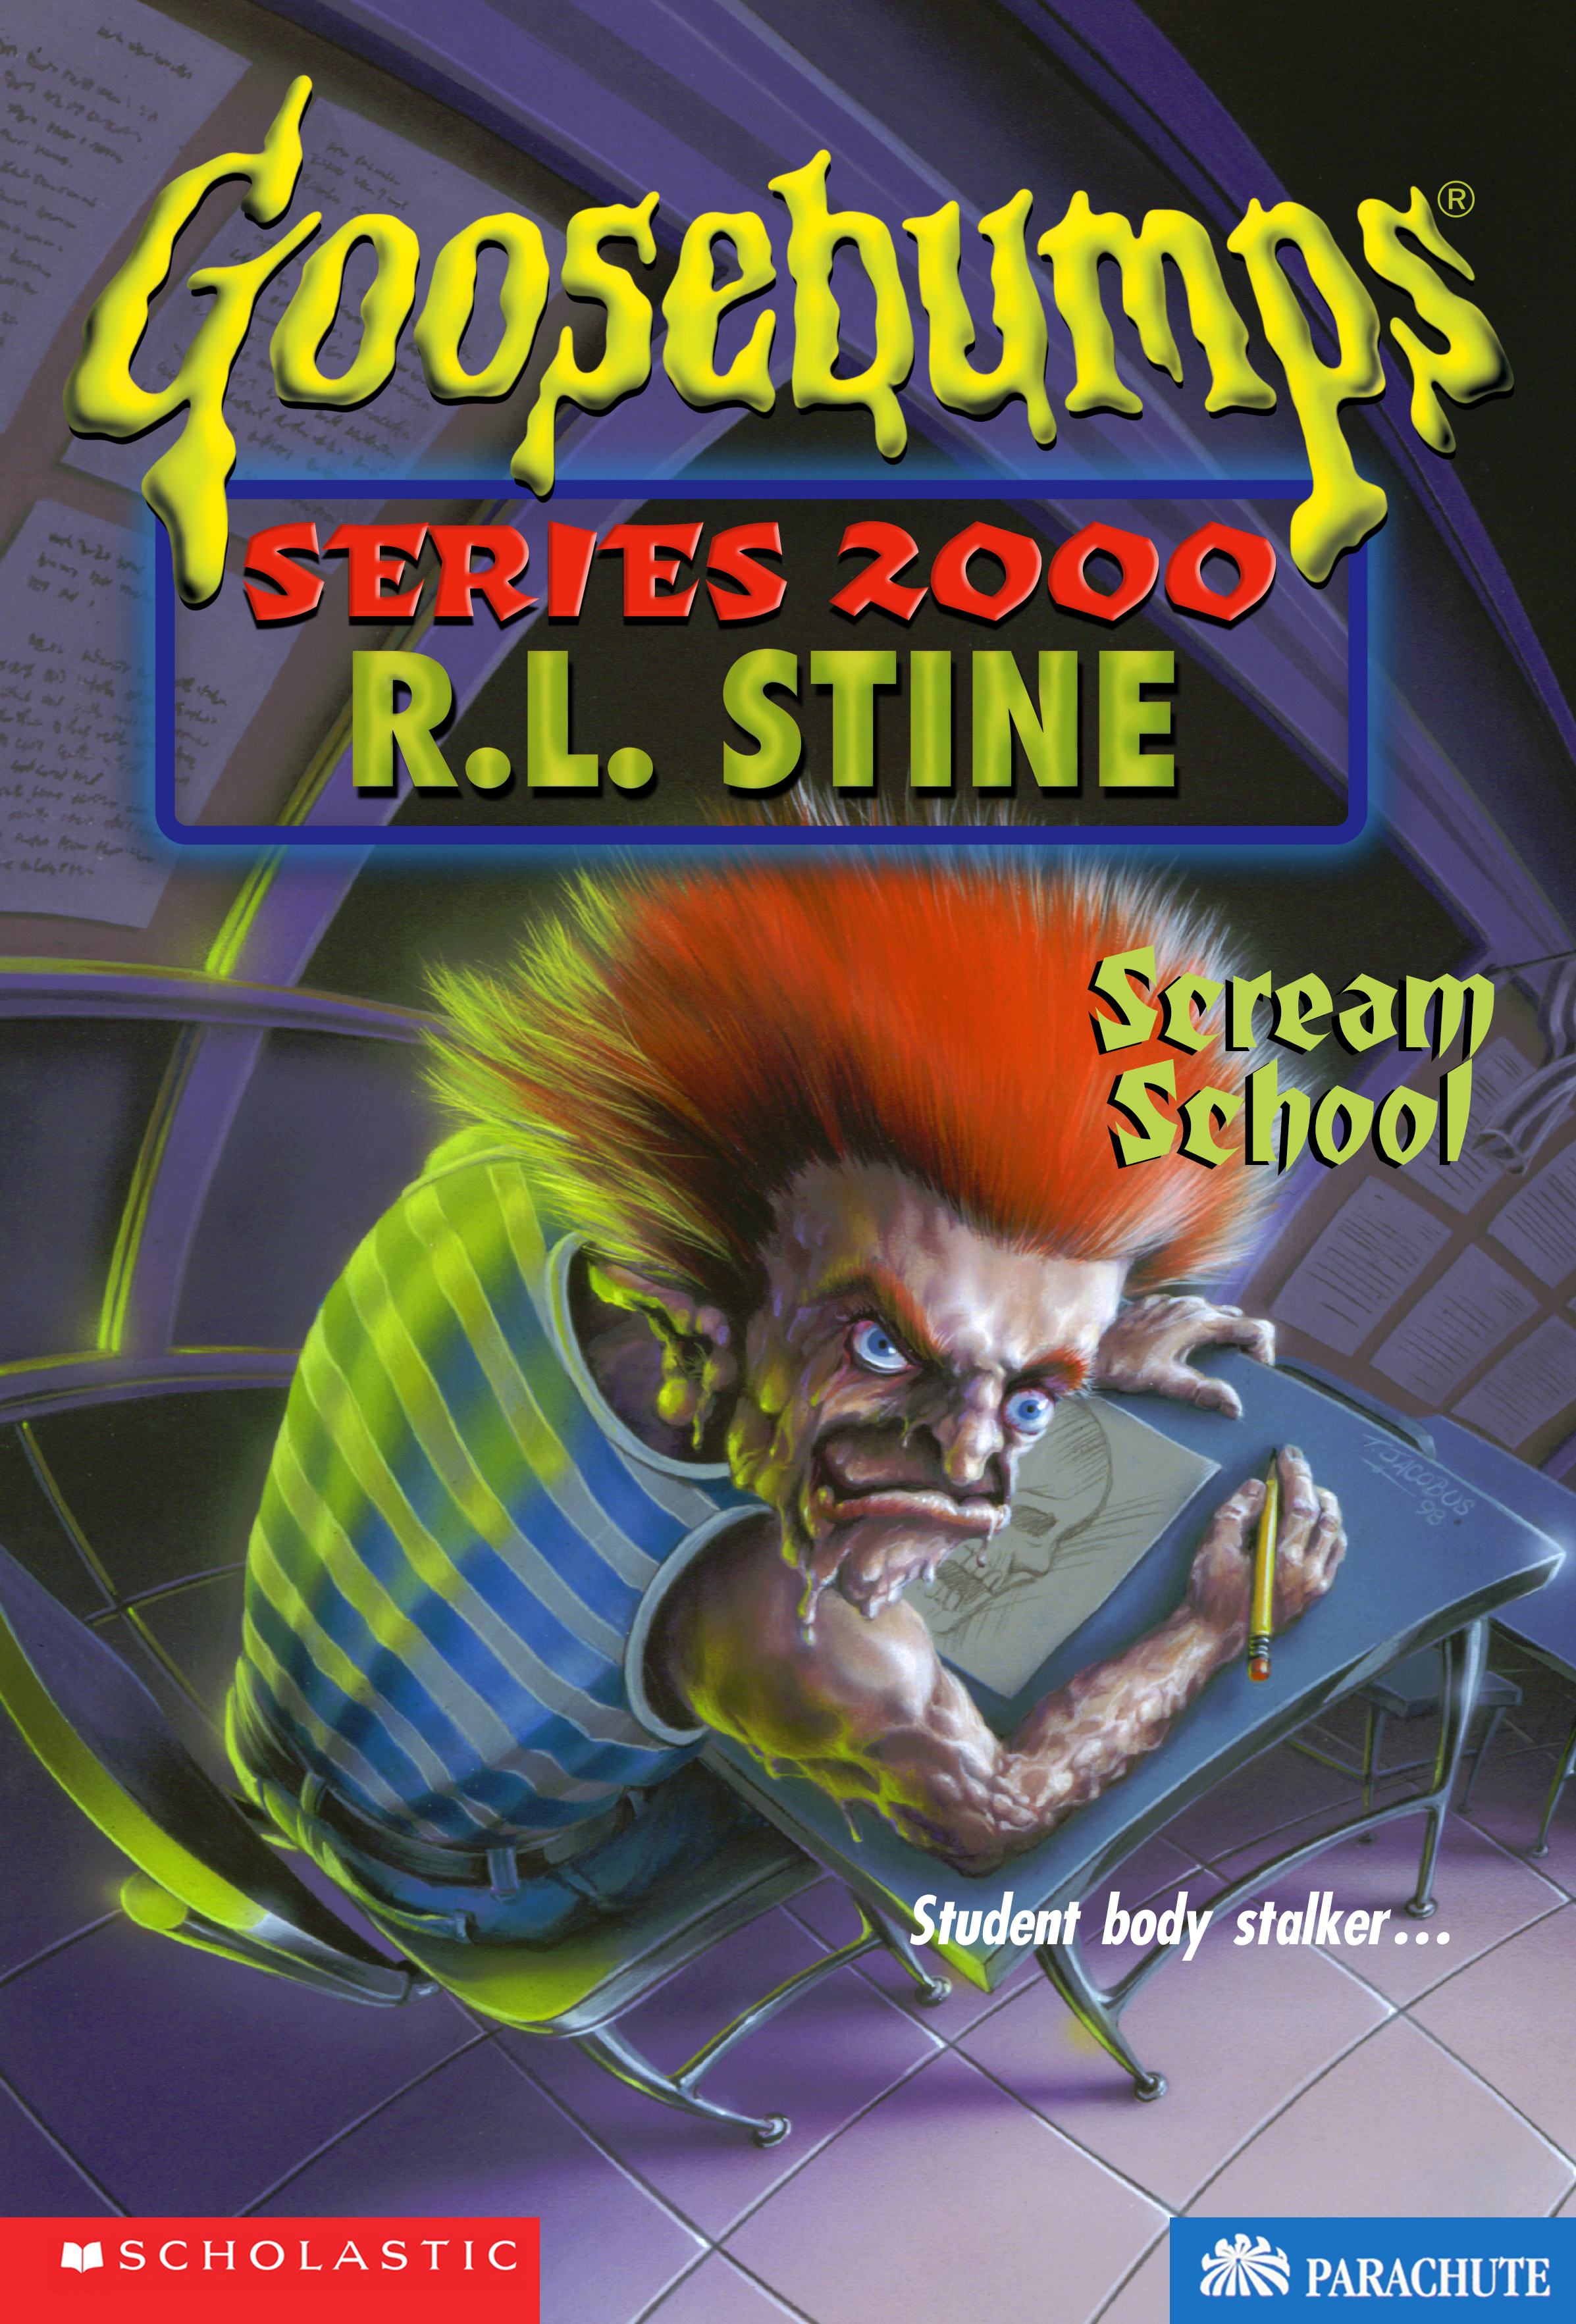 Goosebumps Series 2000 15: Scream School by R.L. Stine